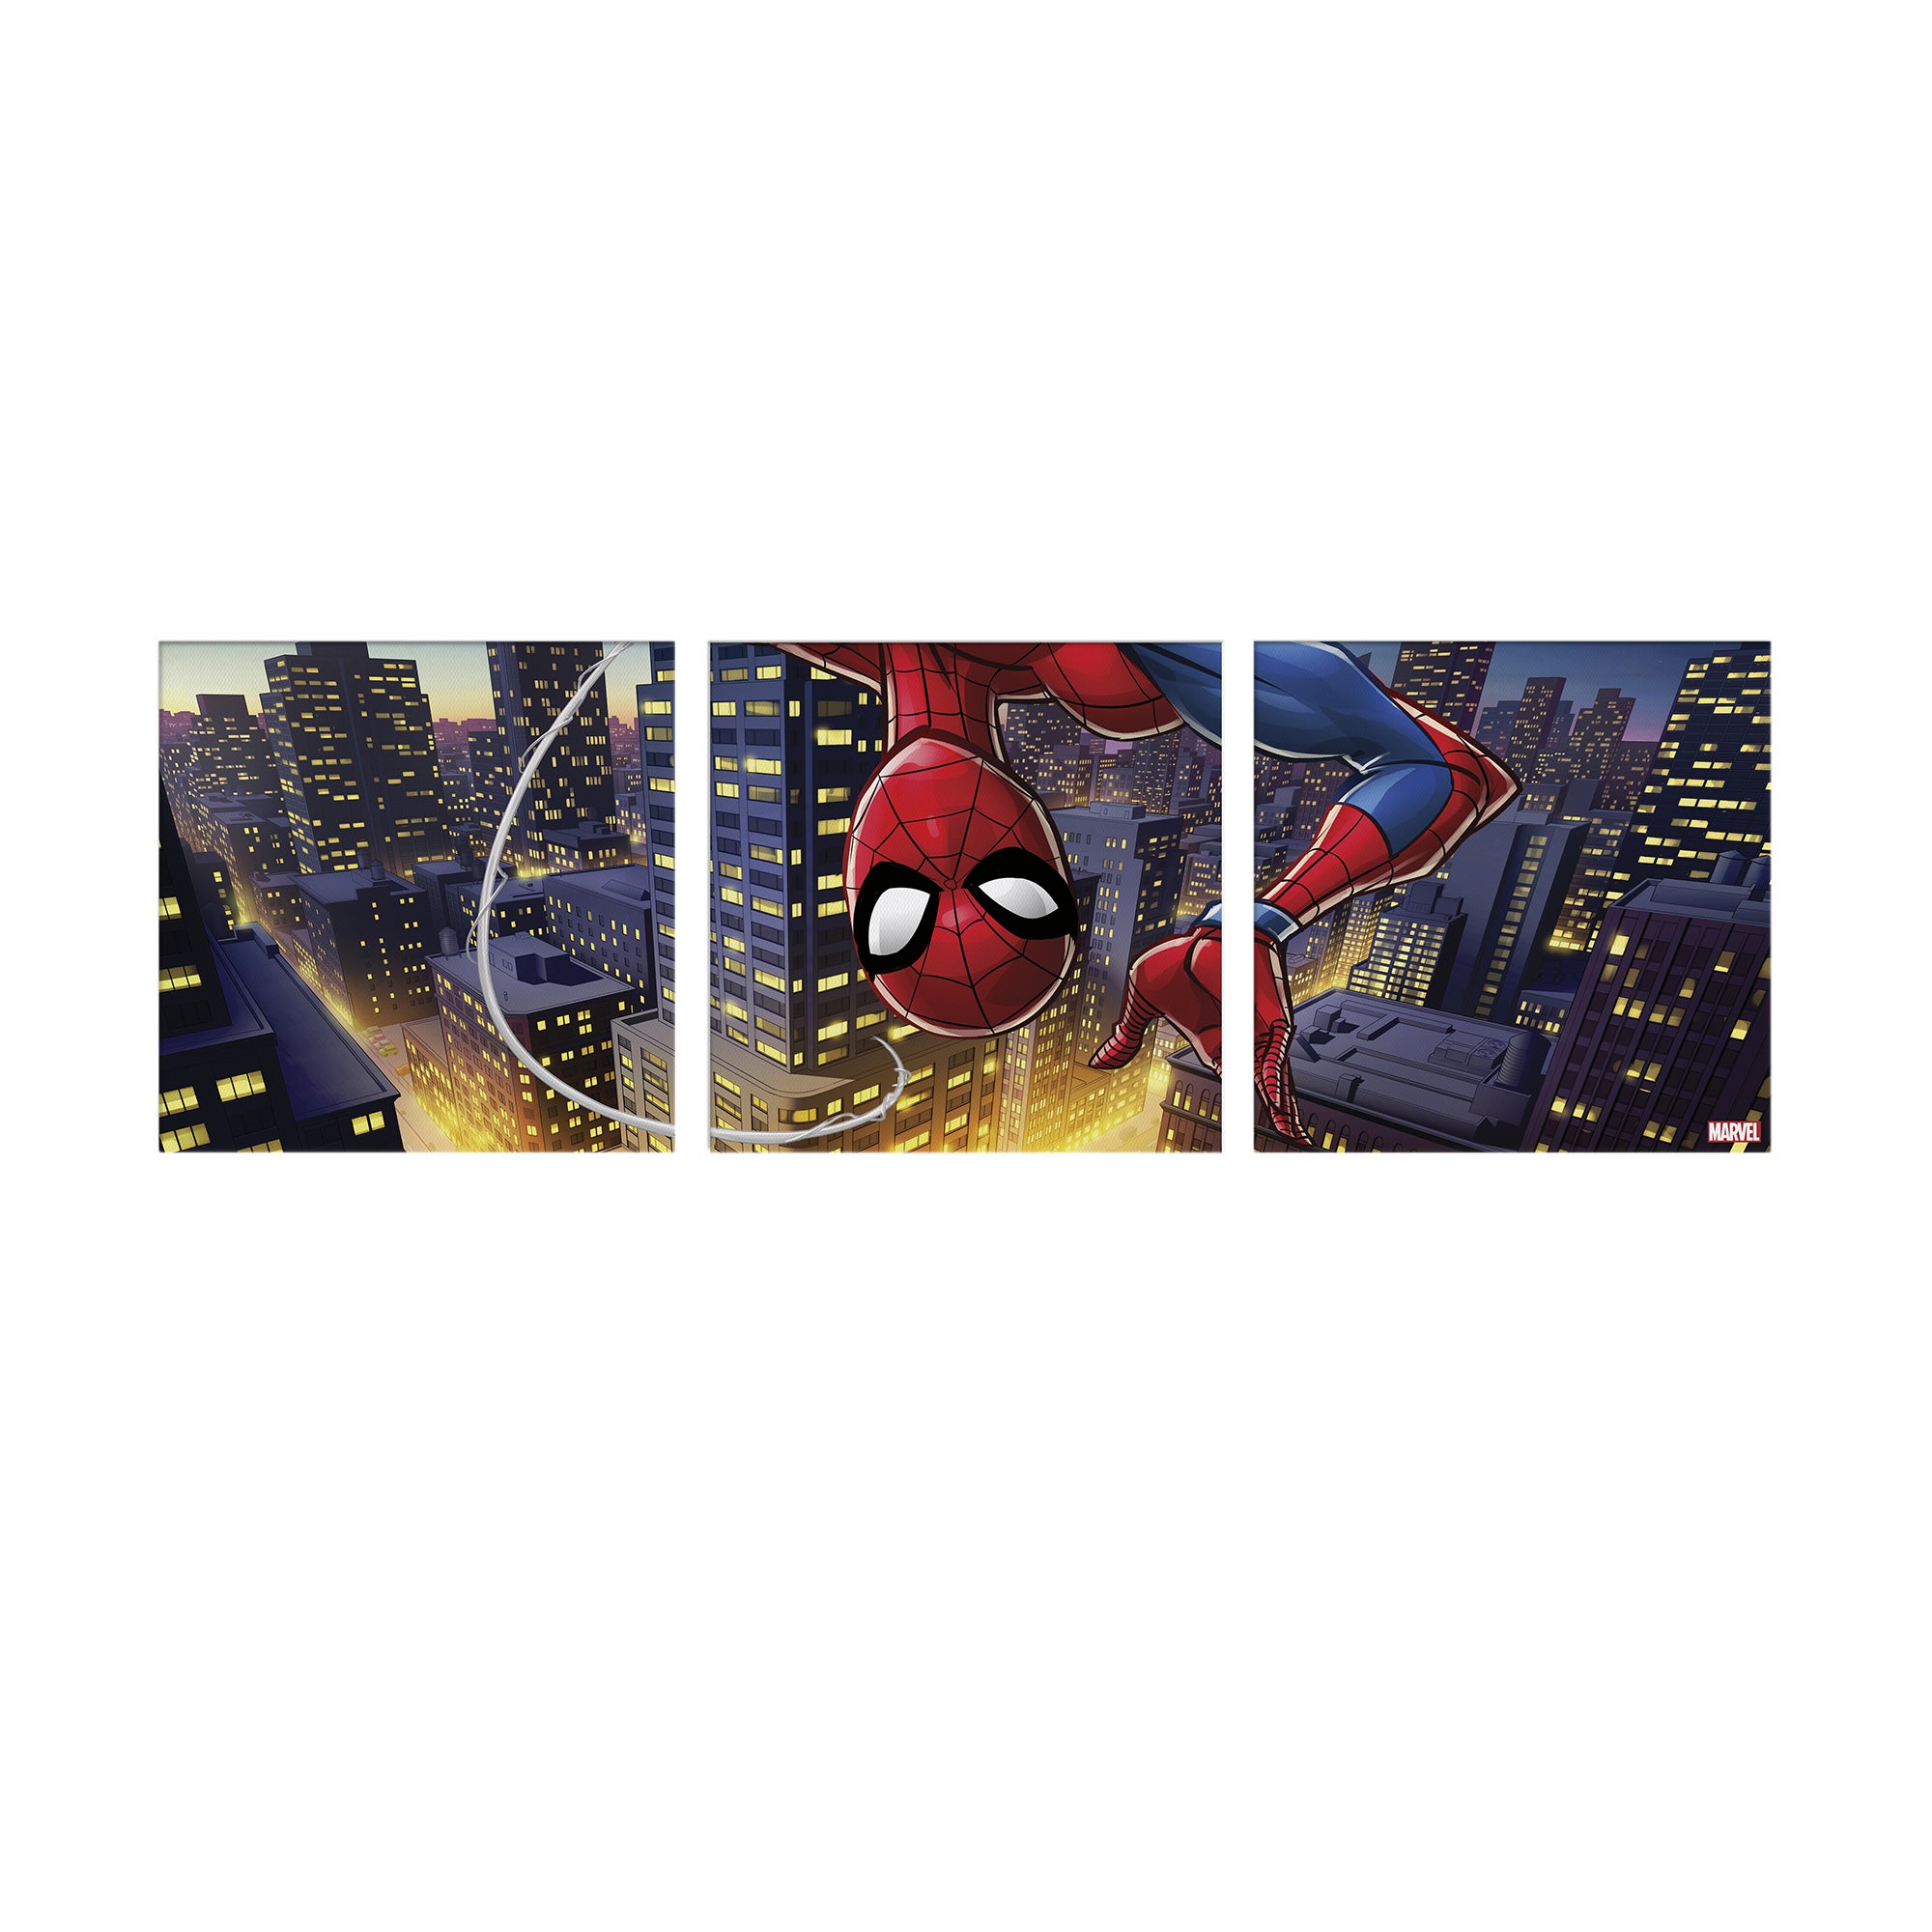 Spiderman Project 1 | My 3DPF Blog!